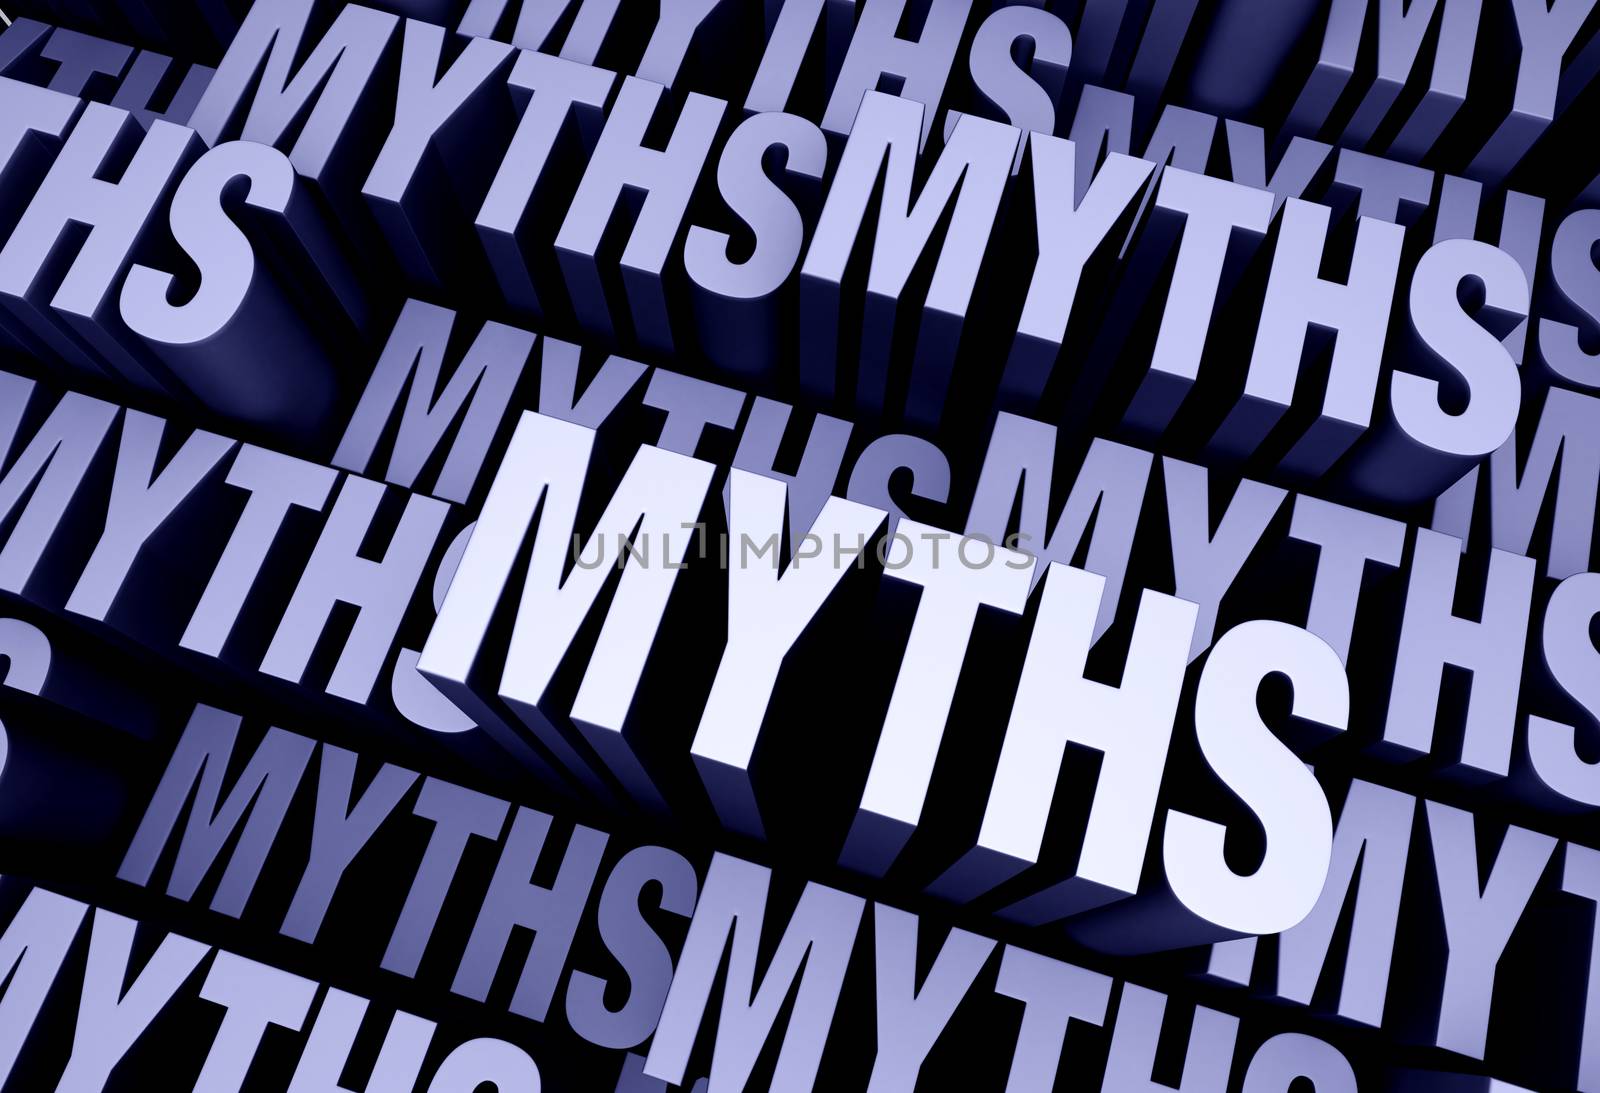 All Myths by Em3